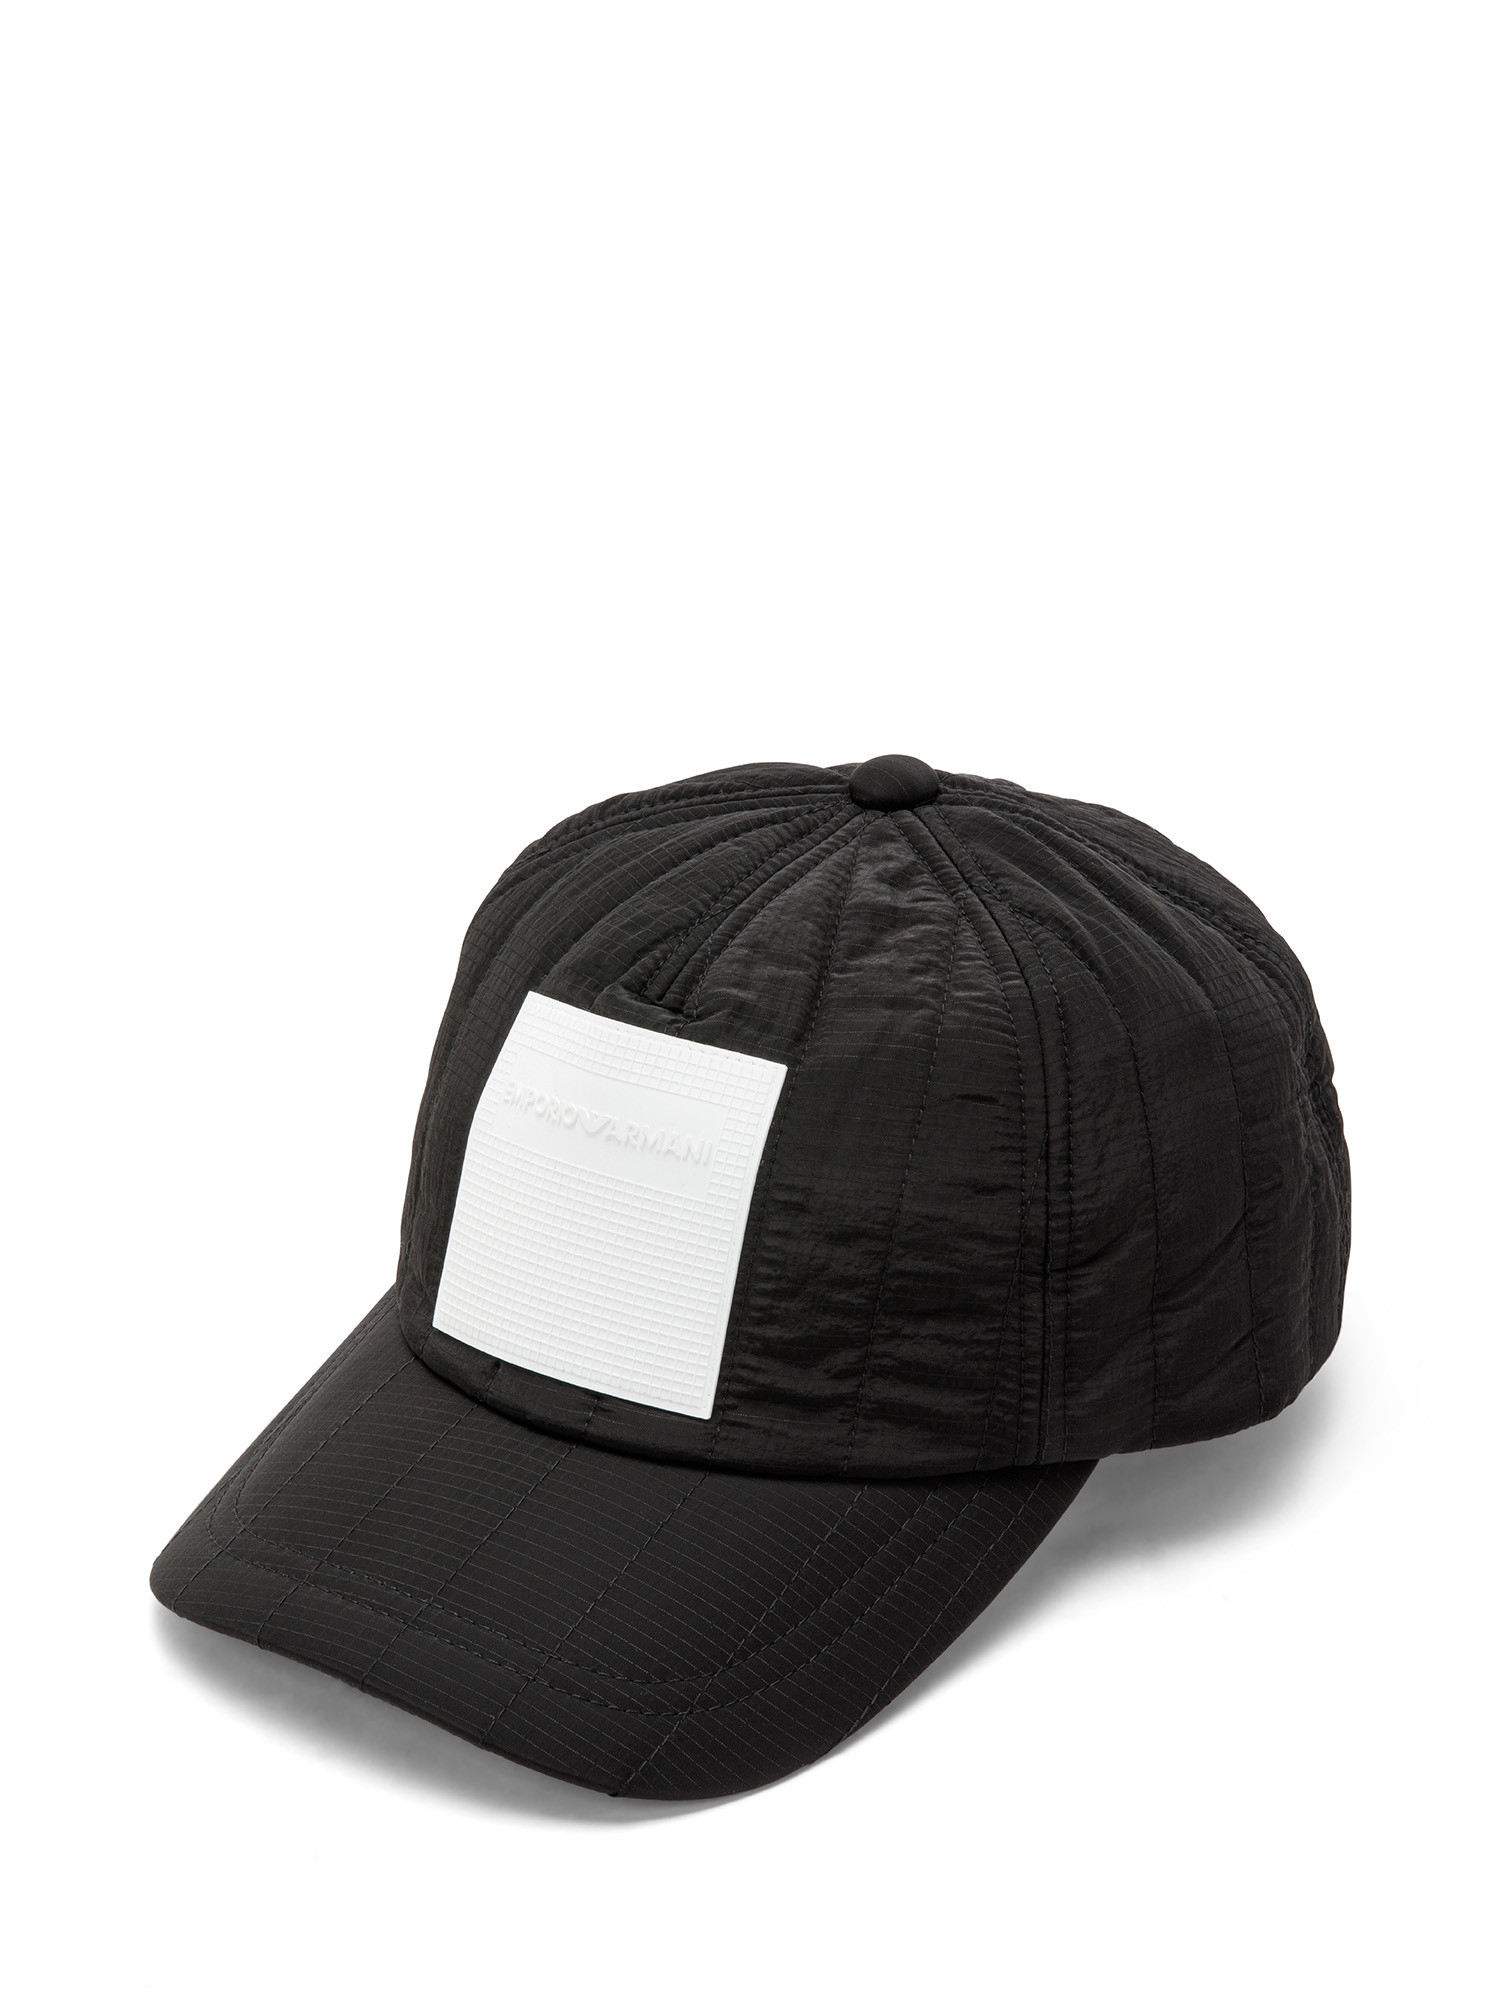 Emporio Armani - Quilted nylon baseball cap, Black, large image number 0